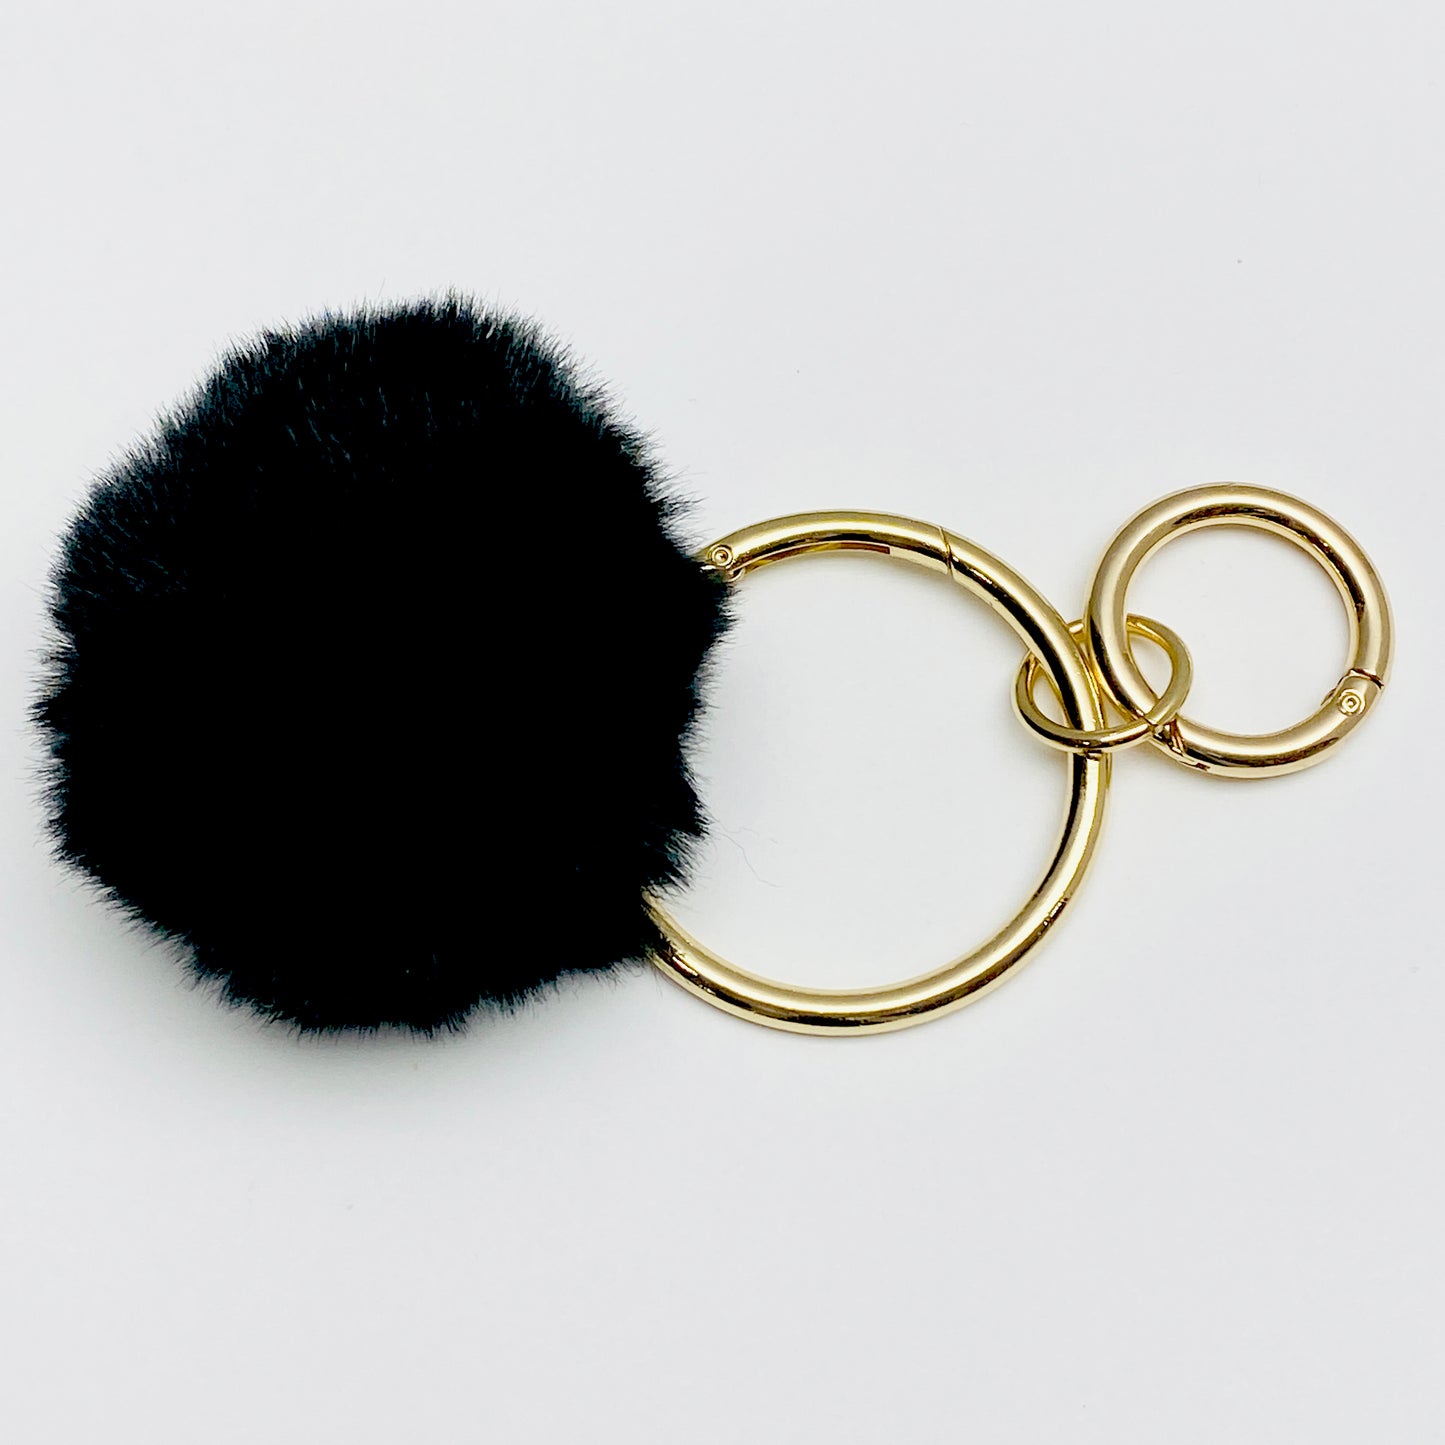 Black Pom Pom Key Chain, Softest Key Chain Accessory for keys and Bags, Faux Fur Designer Bag Key Chain